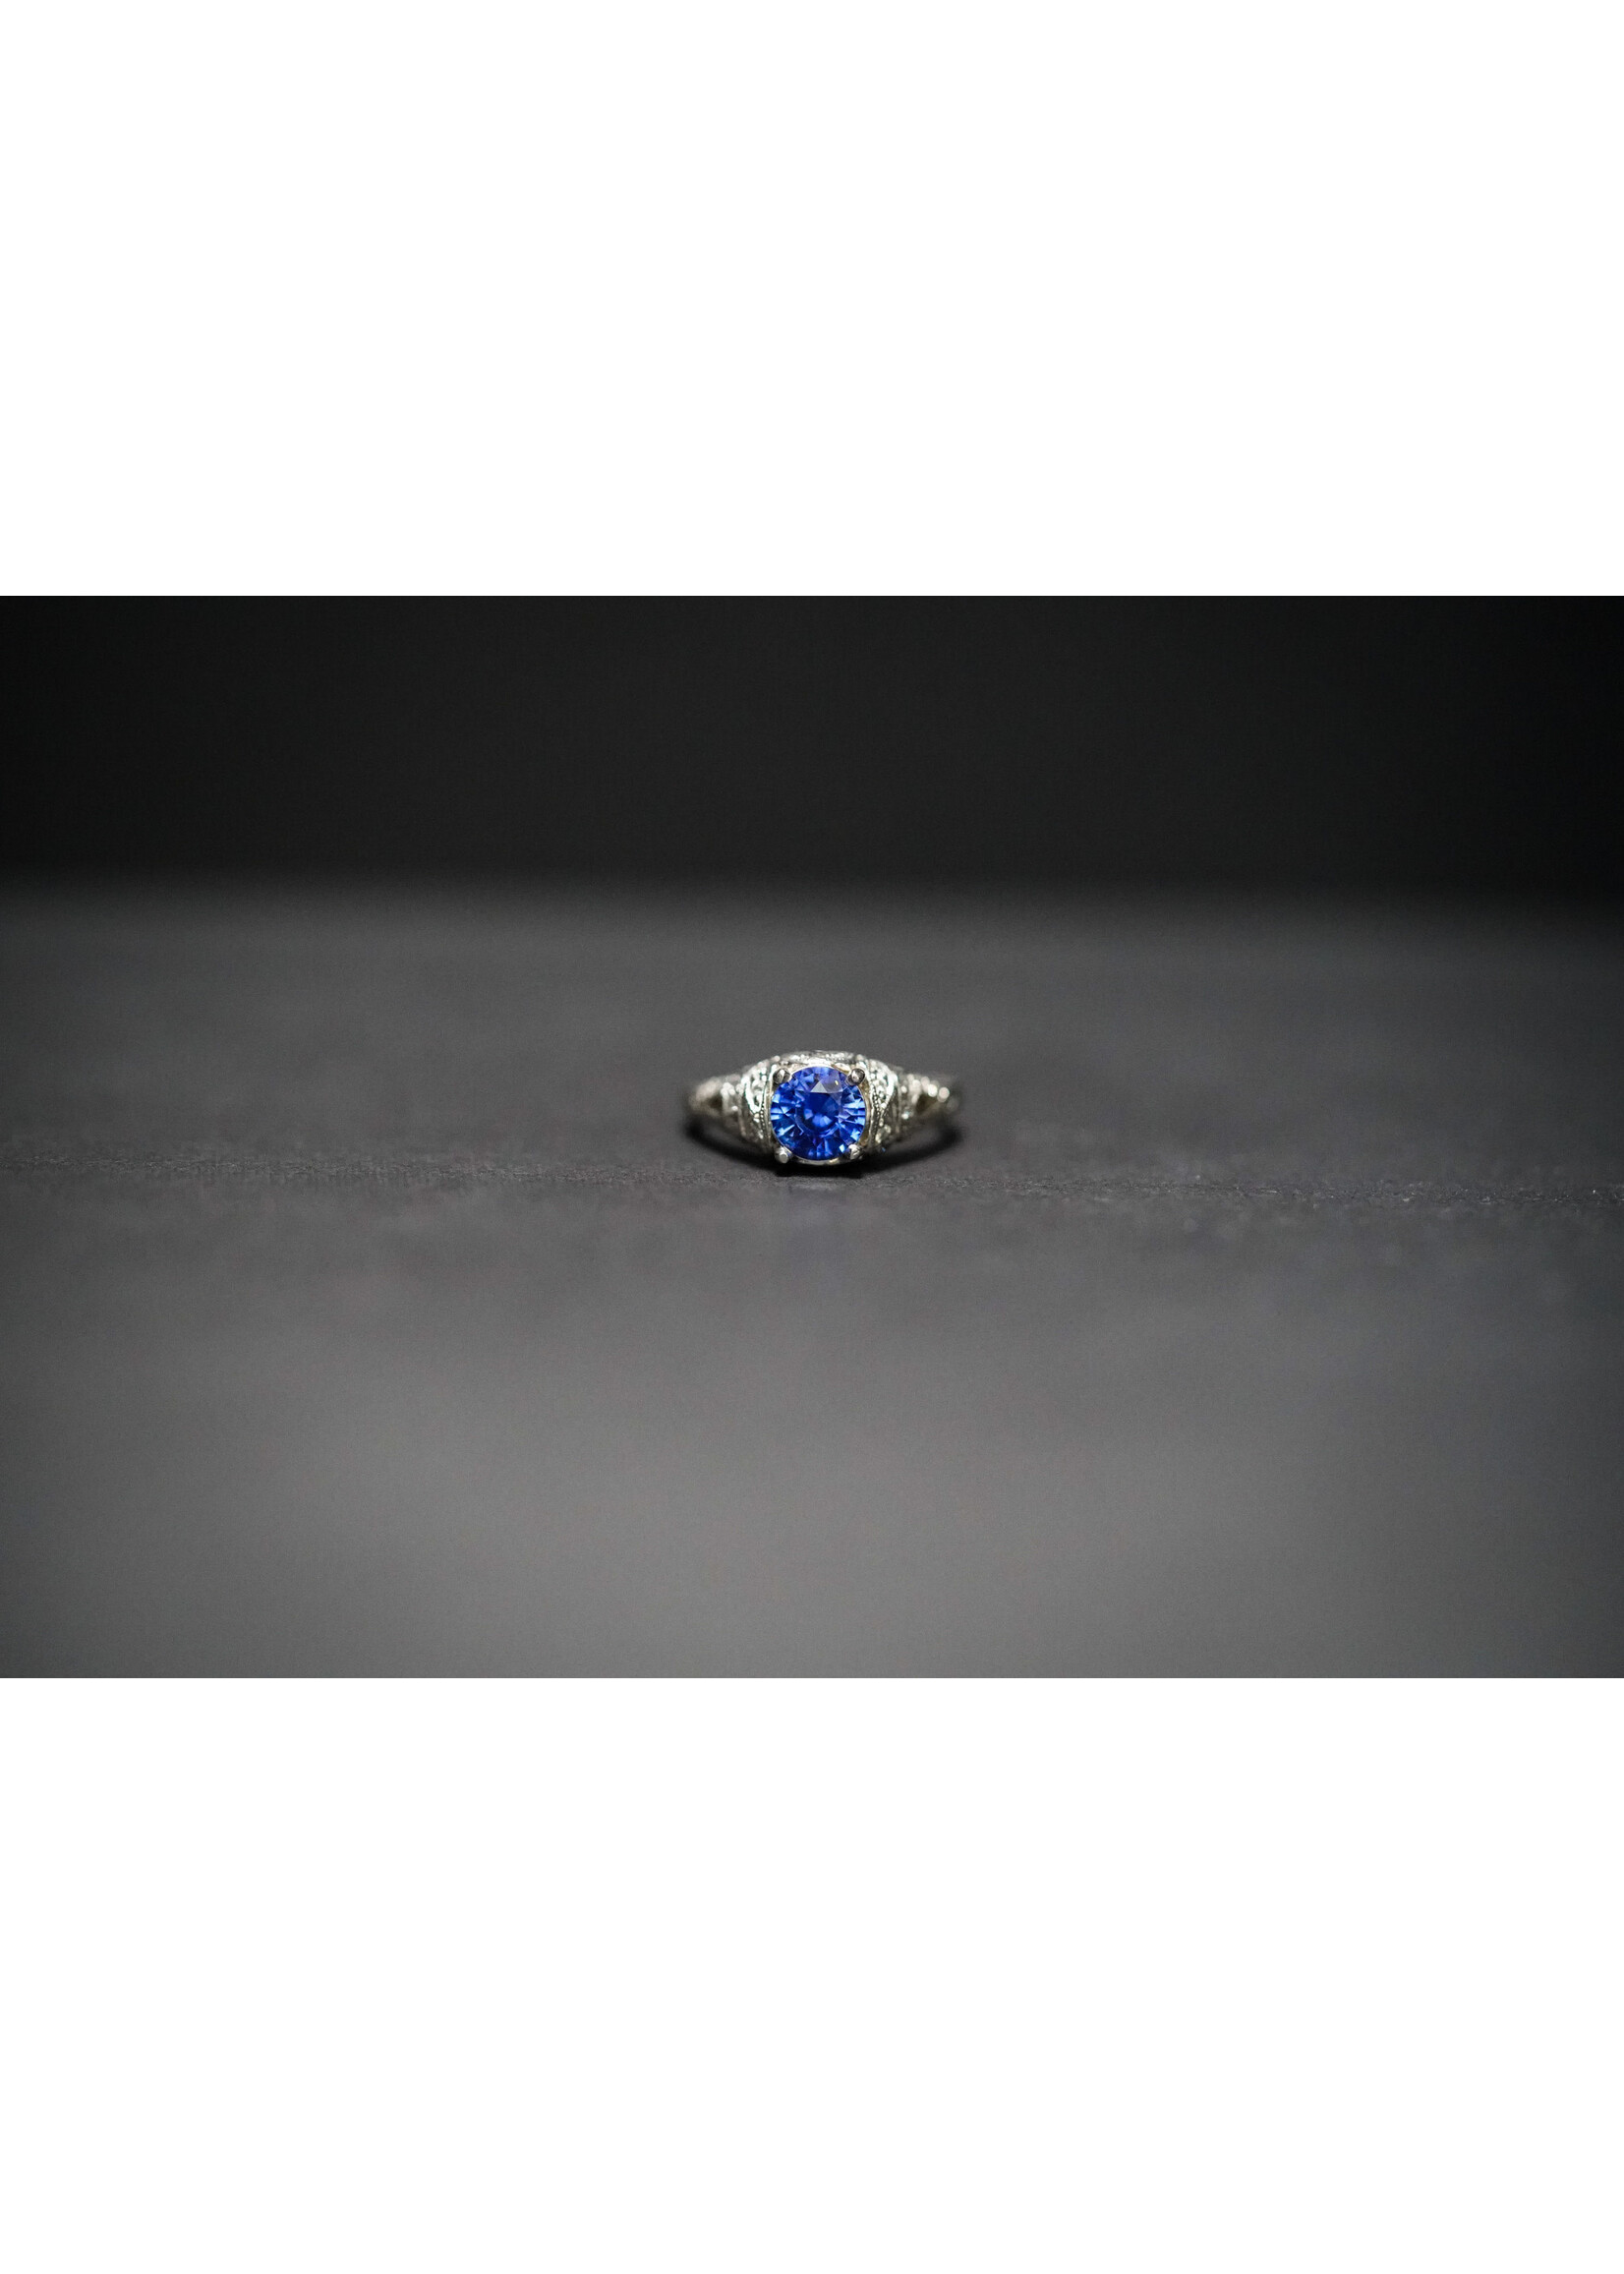 Platinum 5.16g 1.35ctw (1.15ctr) Sapphire & Diamond Vintage Ring (size 5.25)